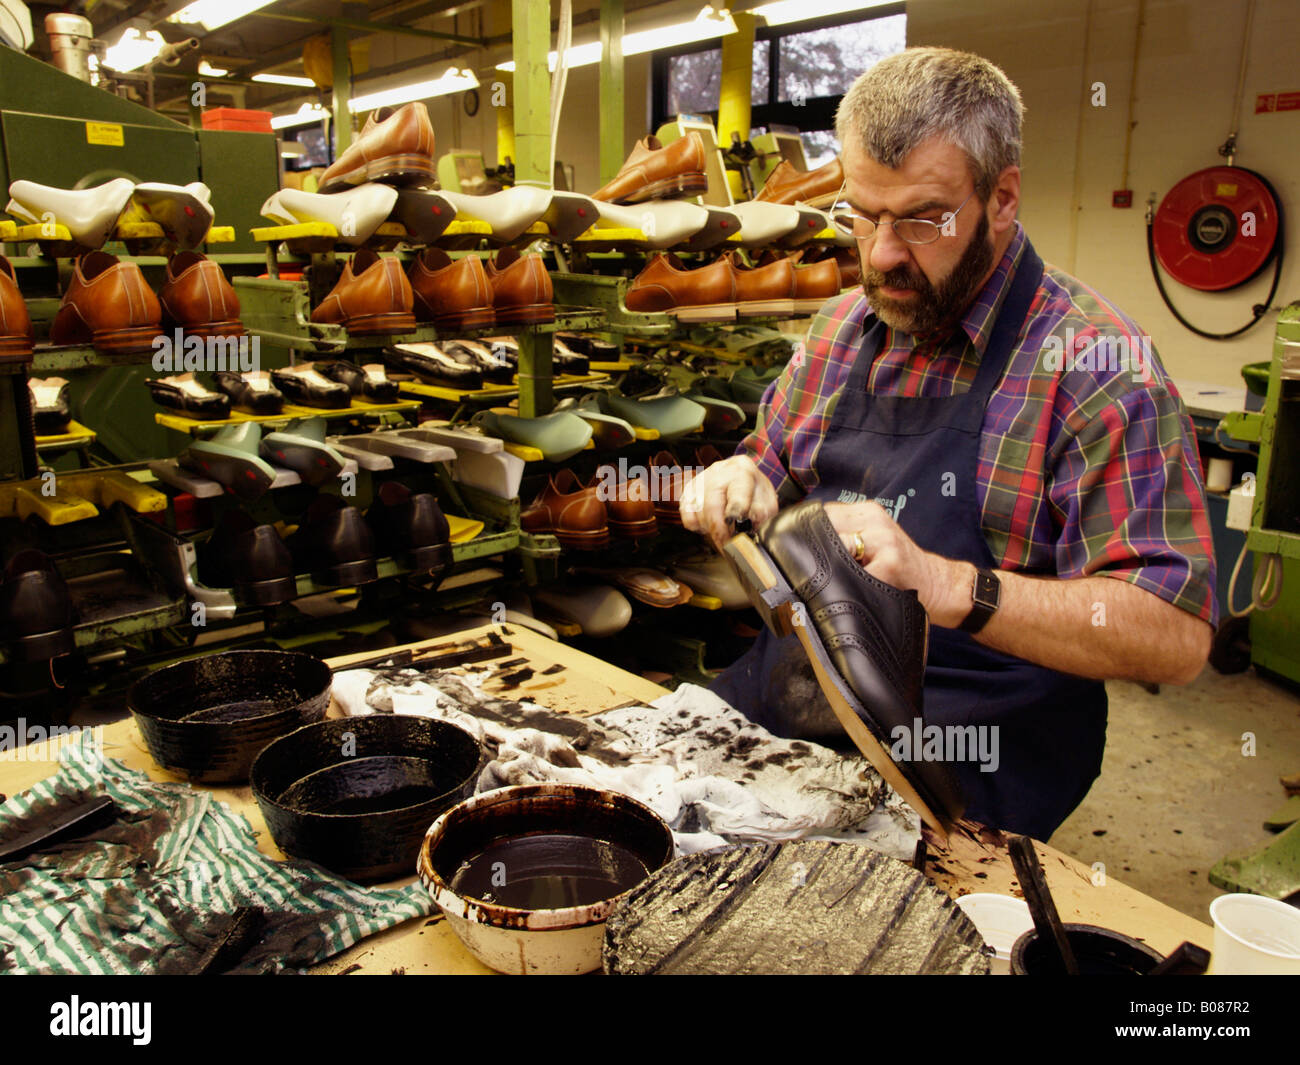 Older gentleman working in a shoe factory doing work manual labour skill craftsmanship van Bommel Stock Photo